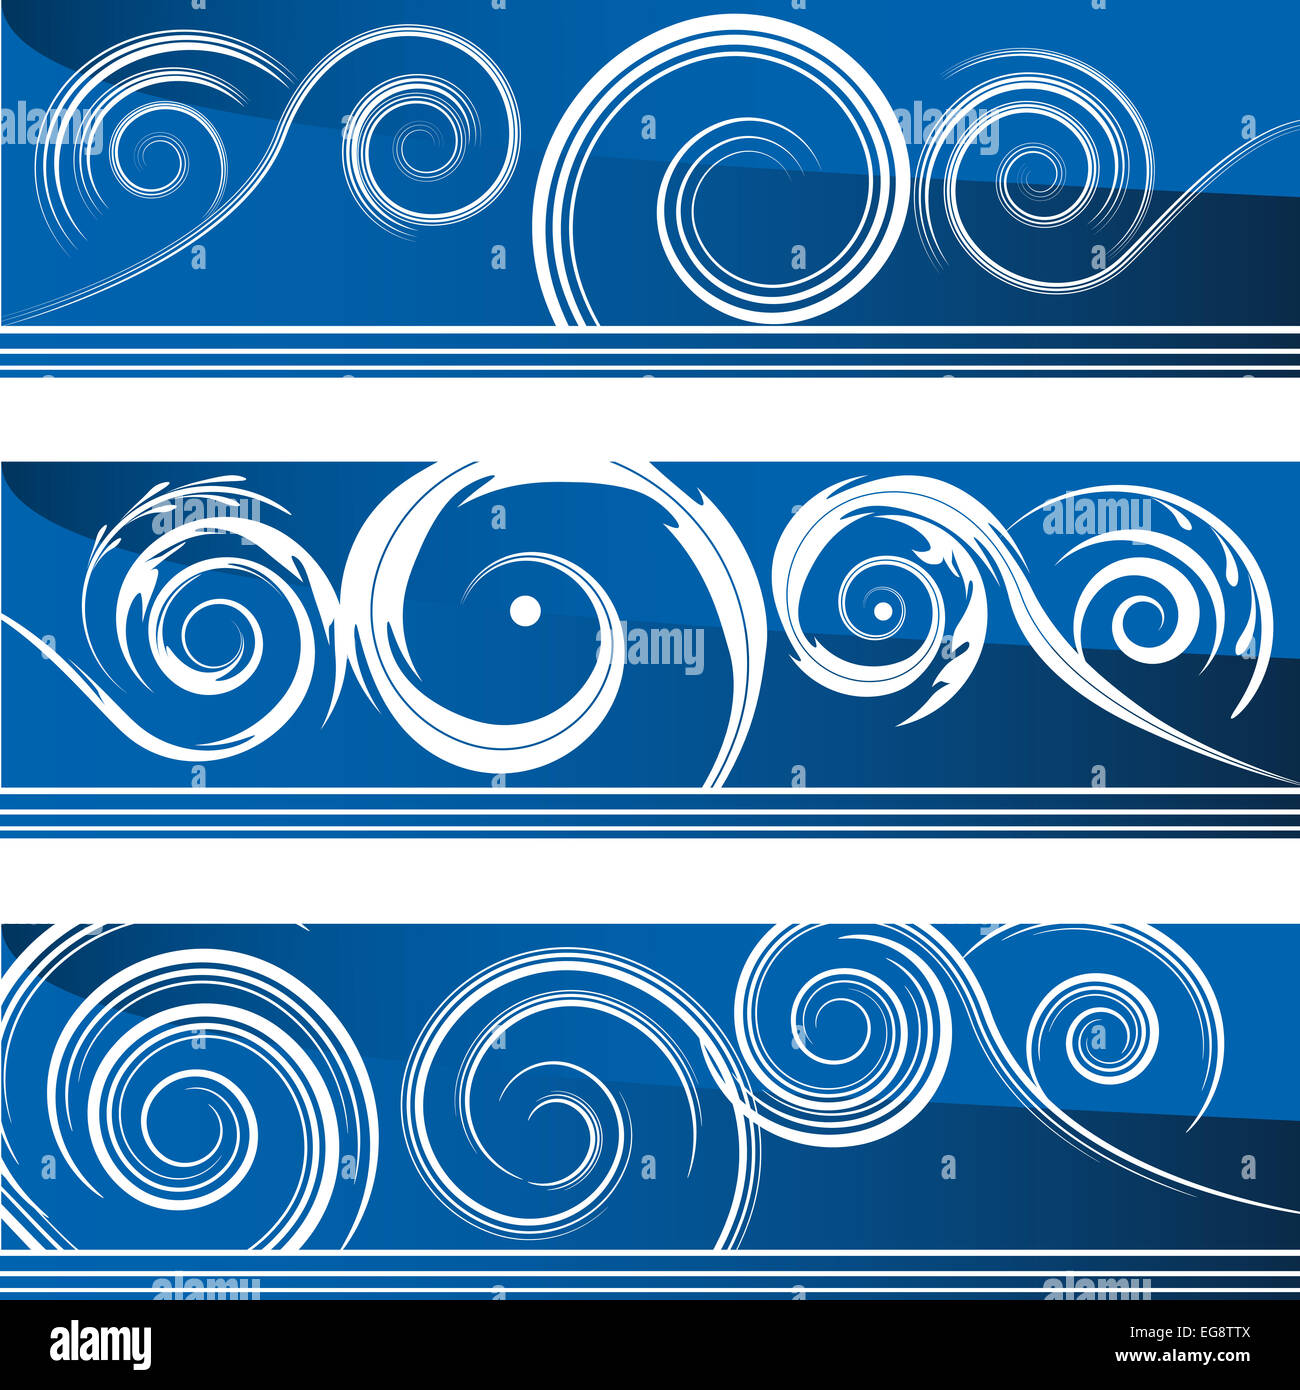 An image of a set of flourish swirl banners. Stock Photo